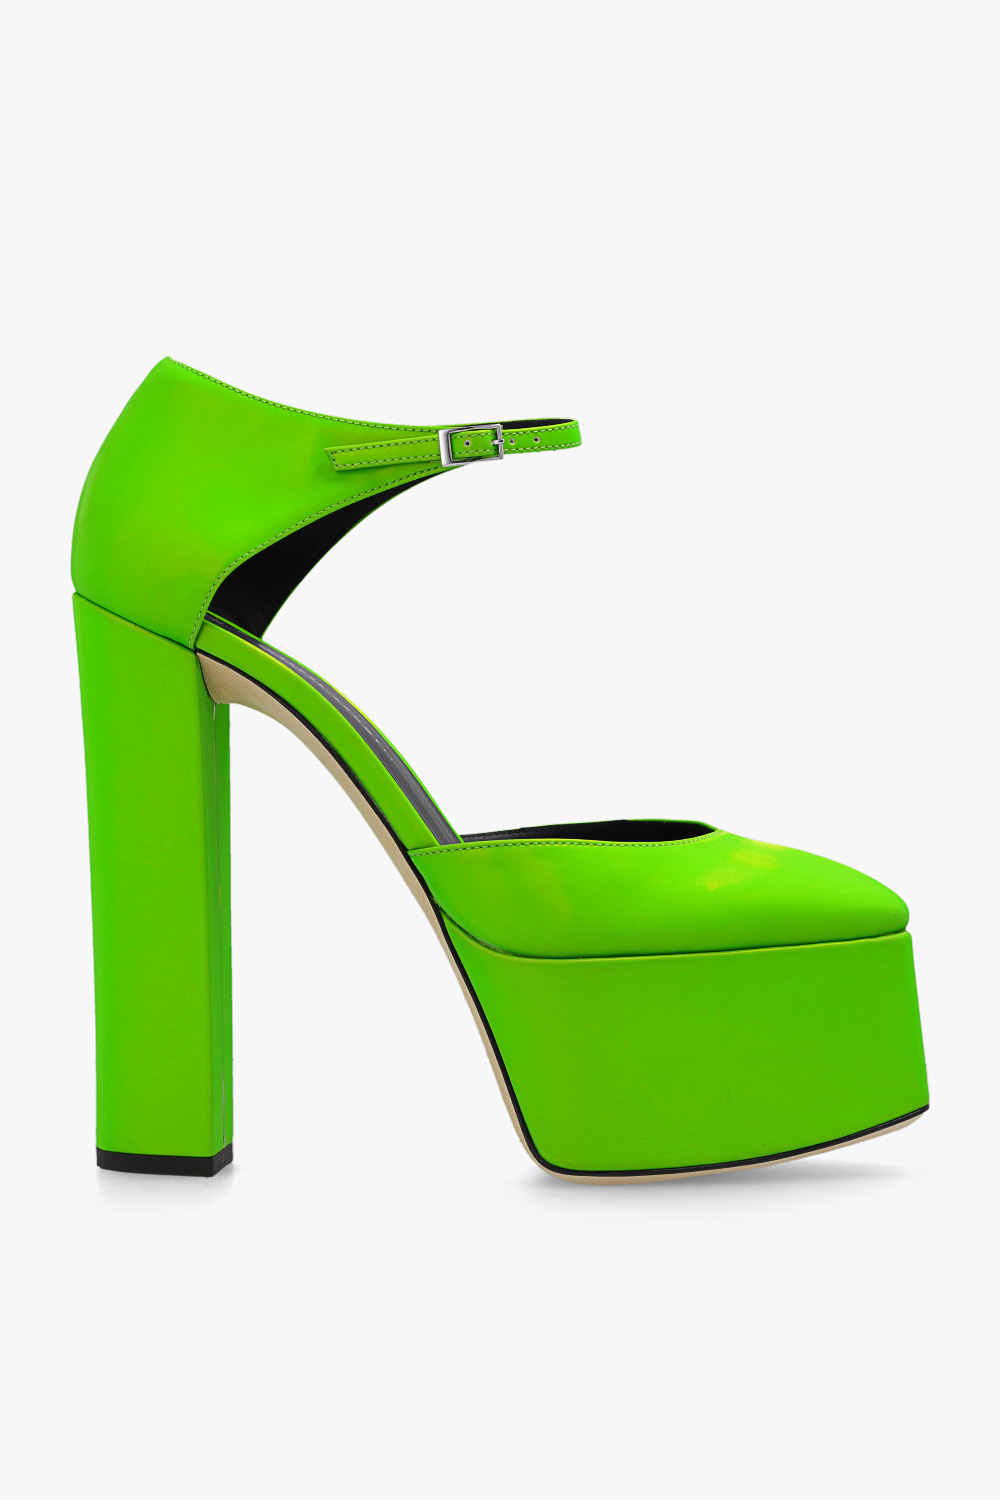 Giuseppe Zanotti 'New York' platform CLS shoes